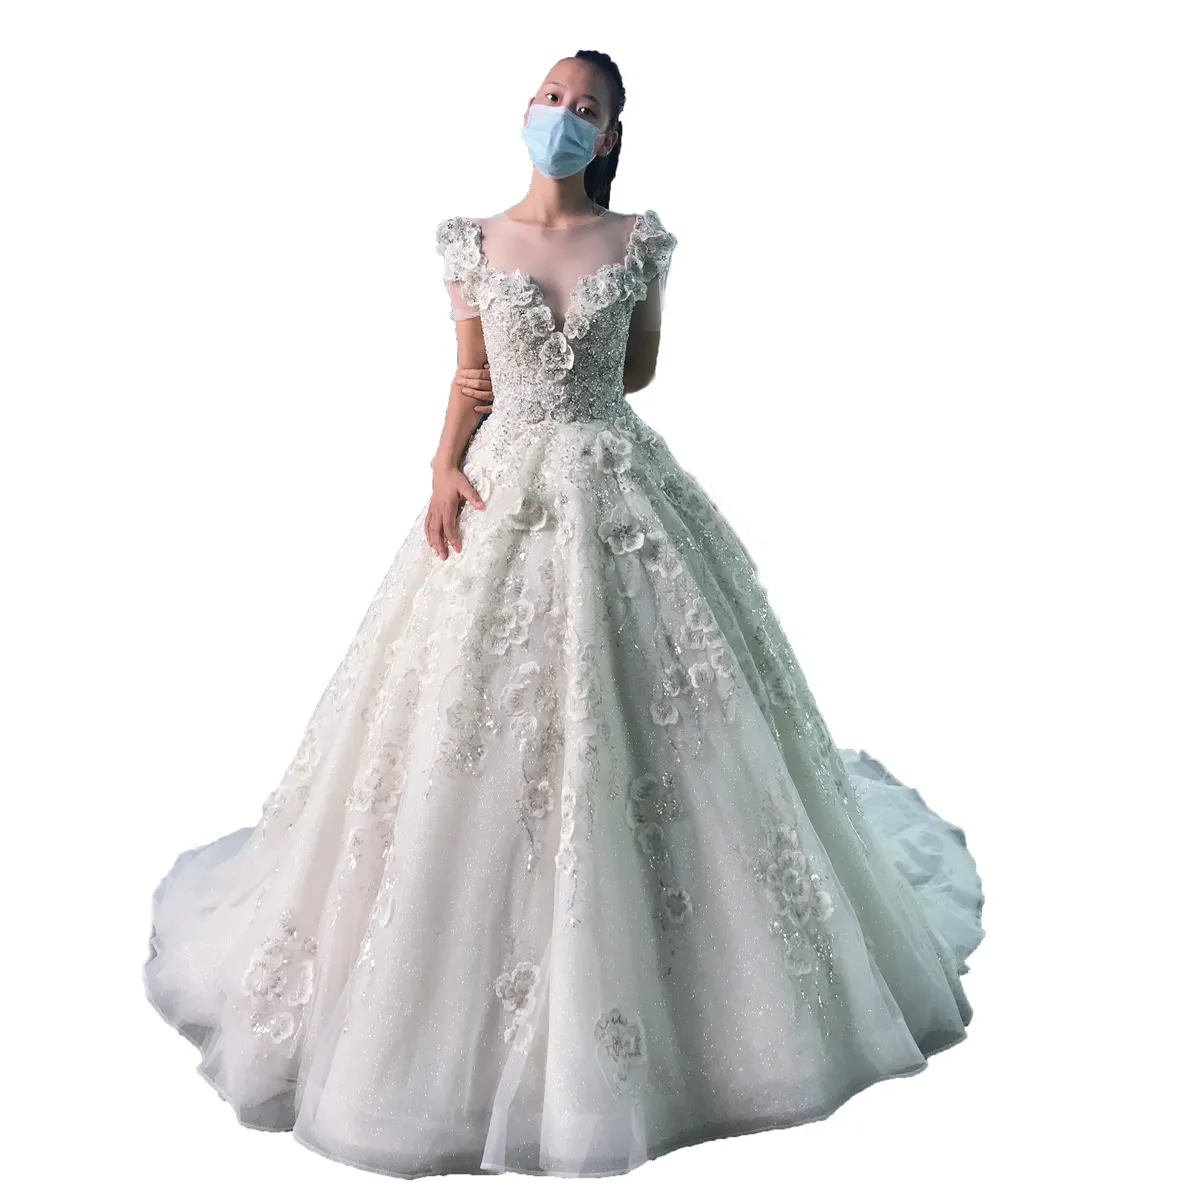 Vestido de novia 2021 Delicate Jewelry Neckline Ball Gown Wedding Dress With Beaded Afraican Lace Appliques Dubai Wedding Gowns